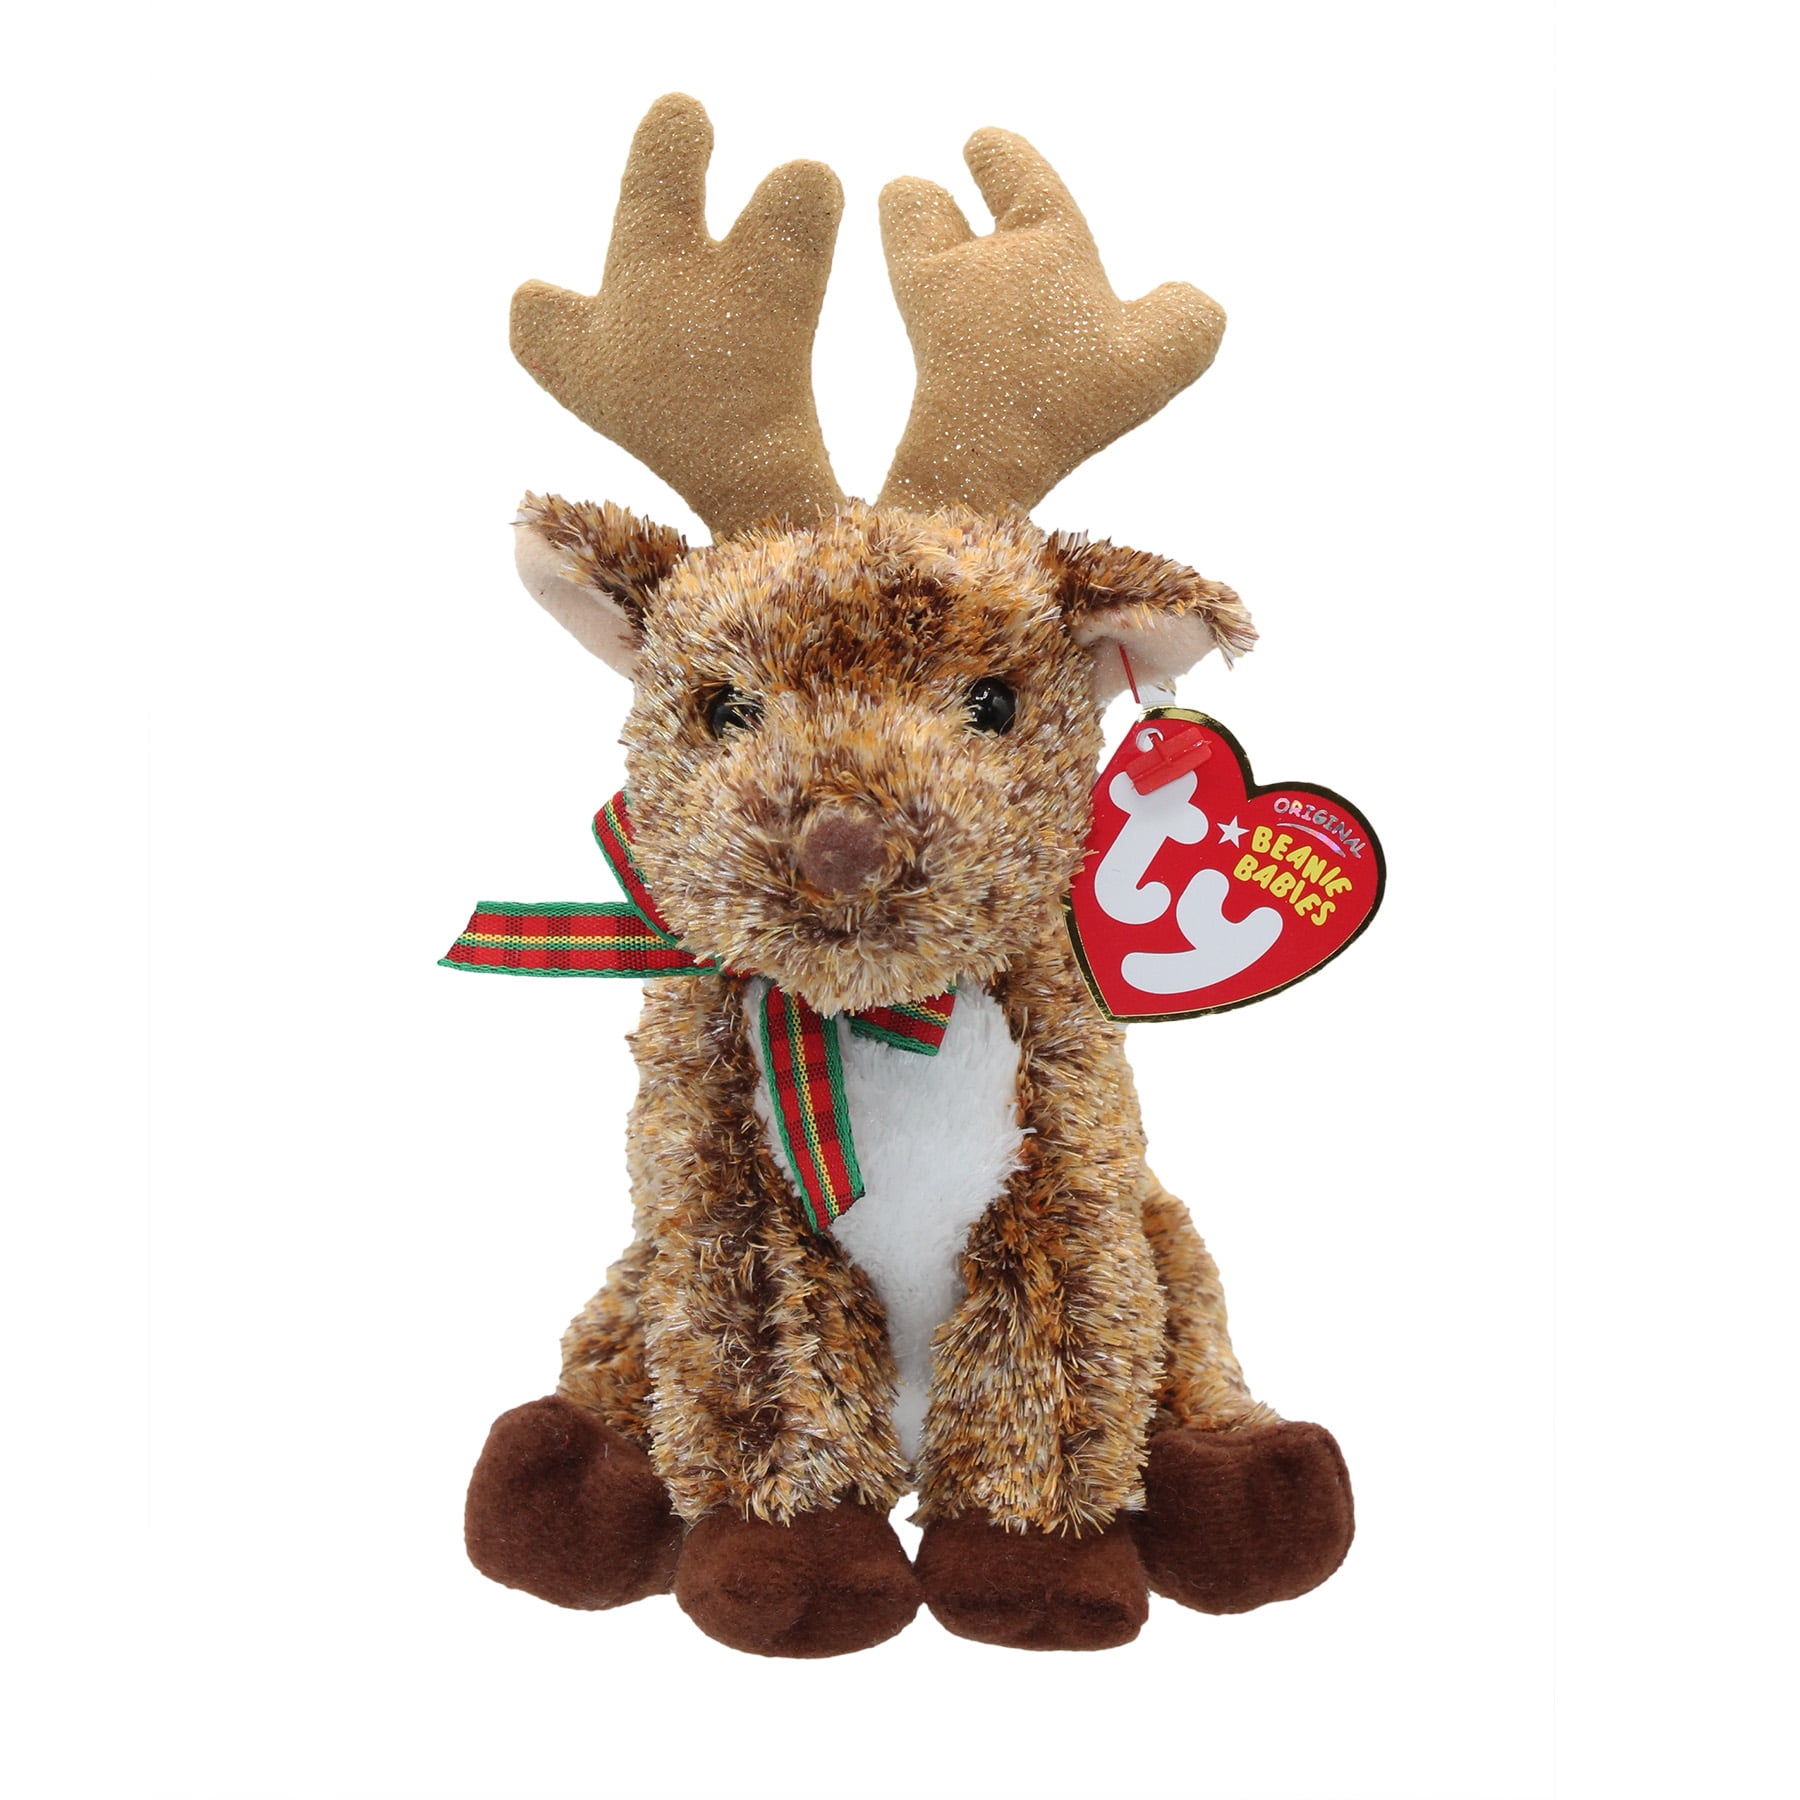 Beanie Baby: the Reindeer | Stuffed Animal | MWMT's - Walmart.com